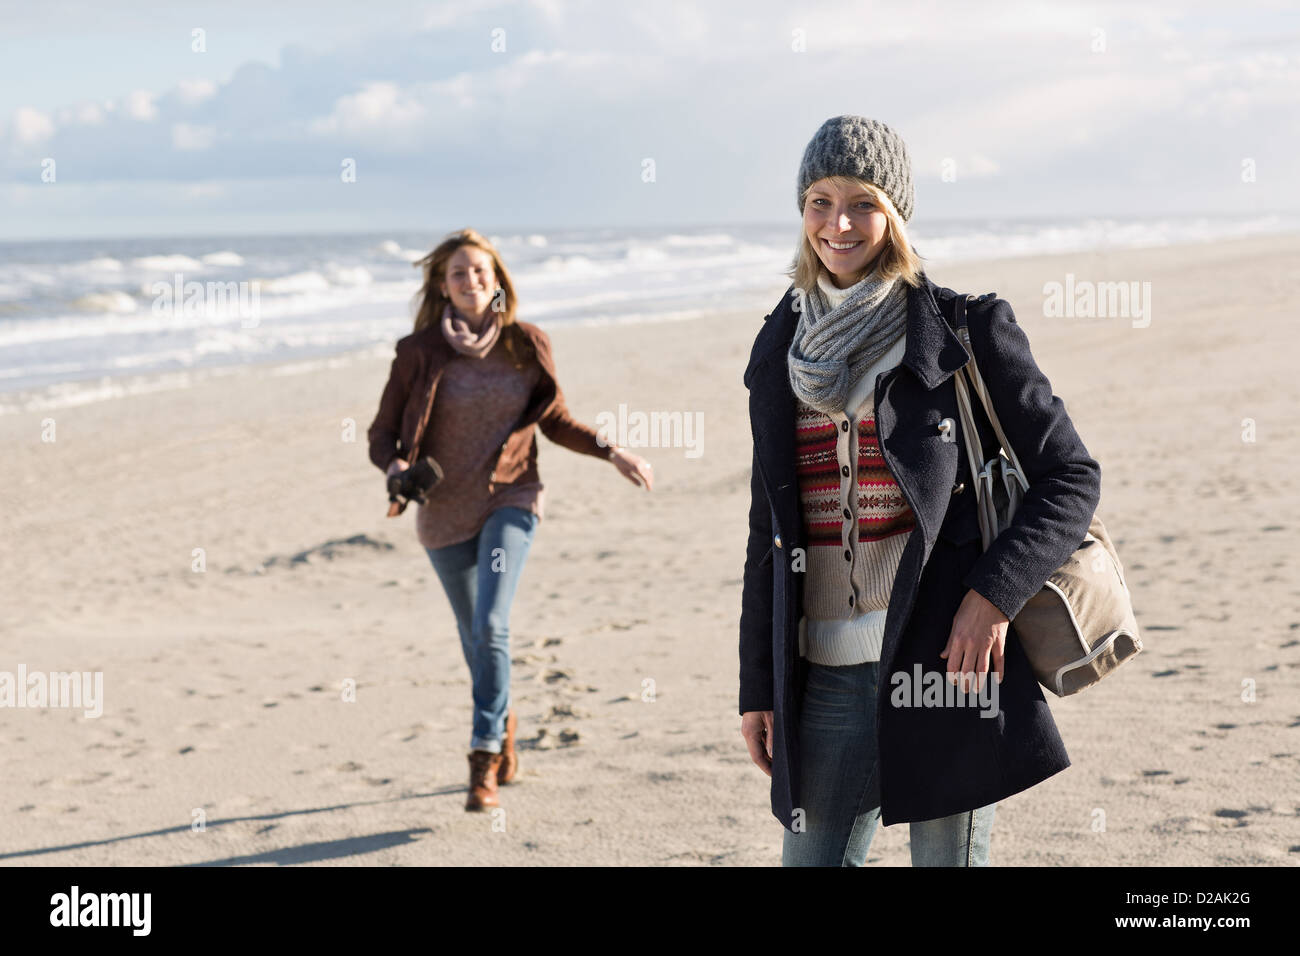 Women walking on beach Stock Photo